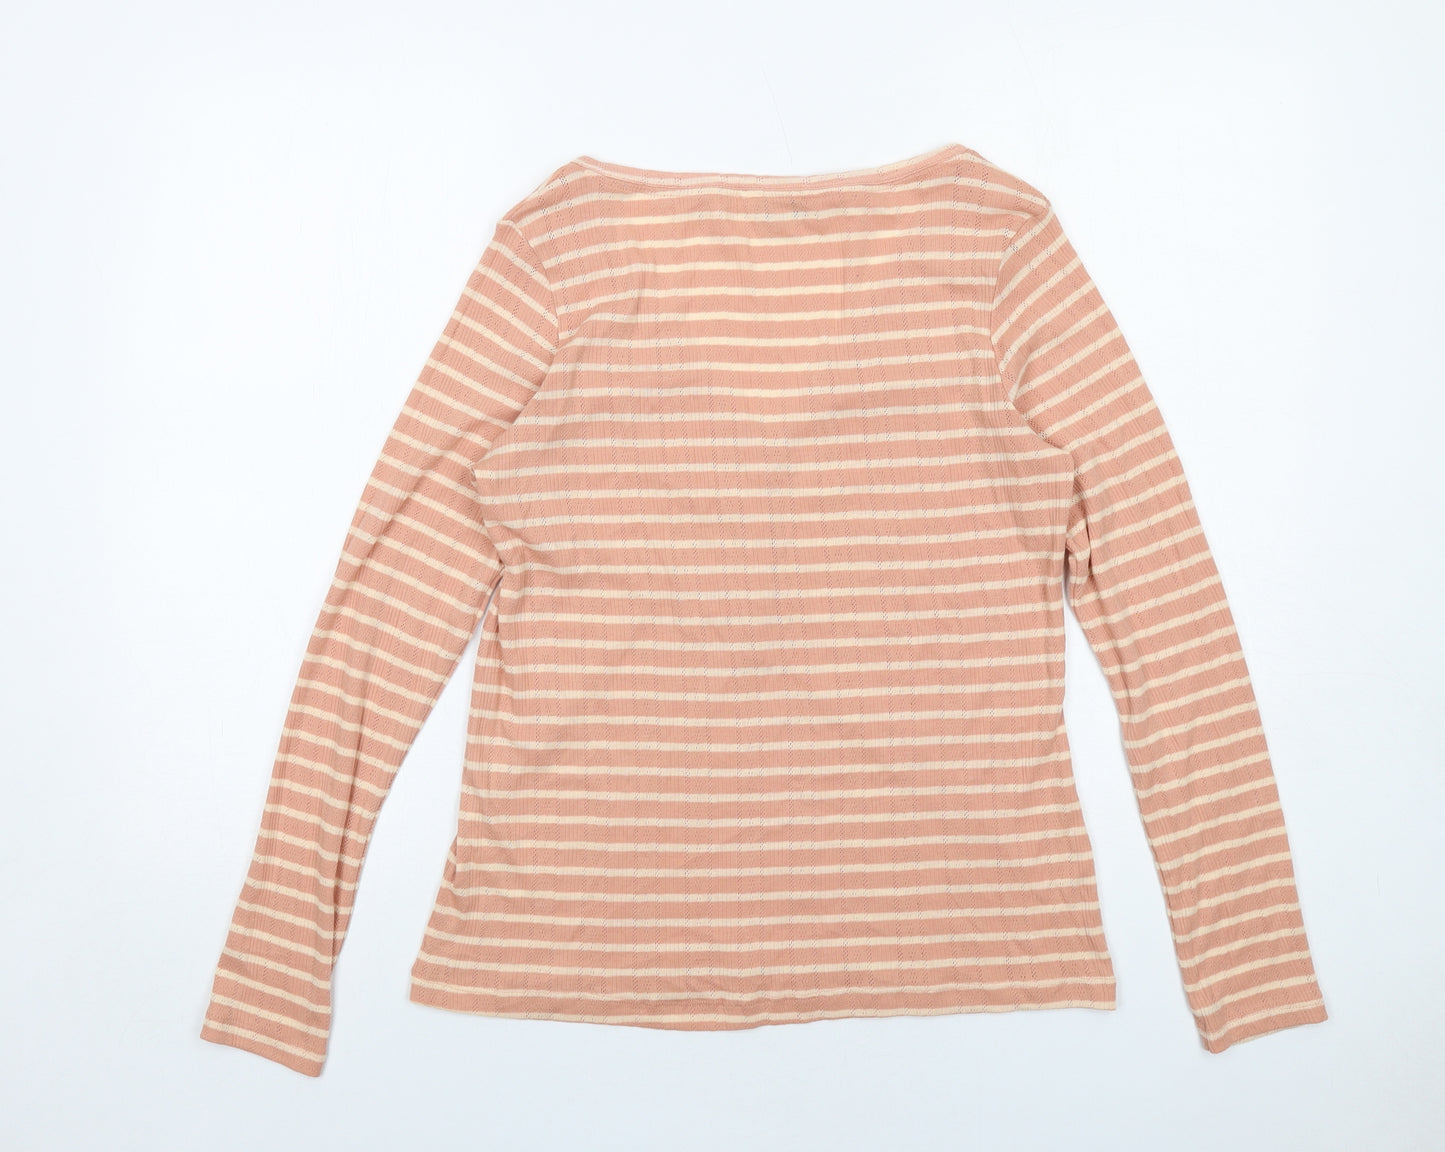 NEXT Womens Pink Striped Cotton Basic T-Shirt Size 14 V-Neck